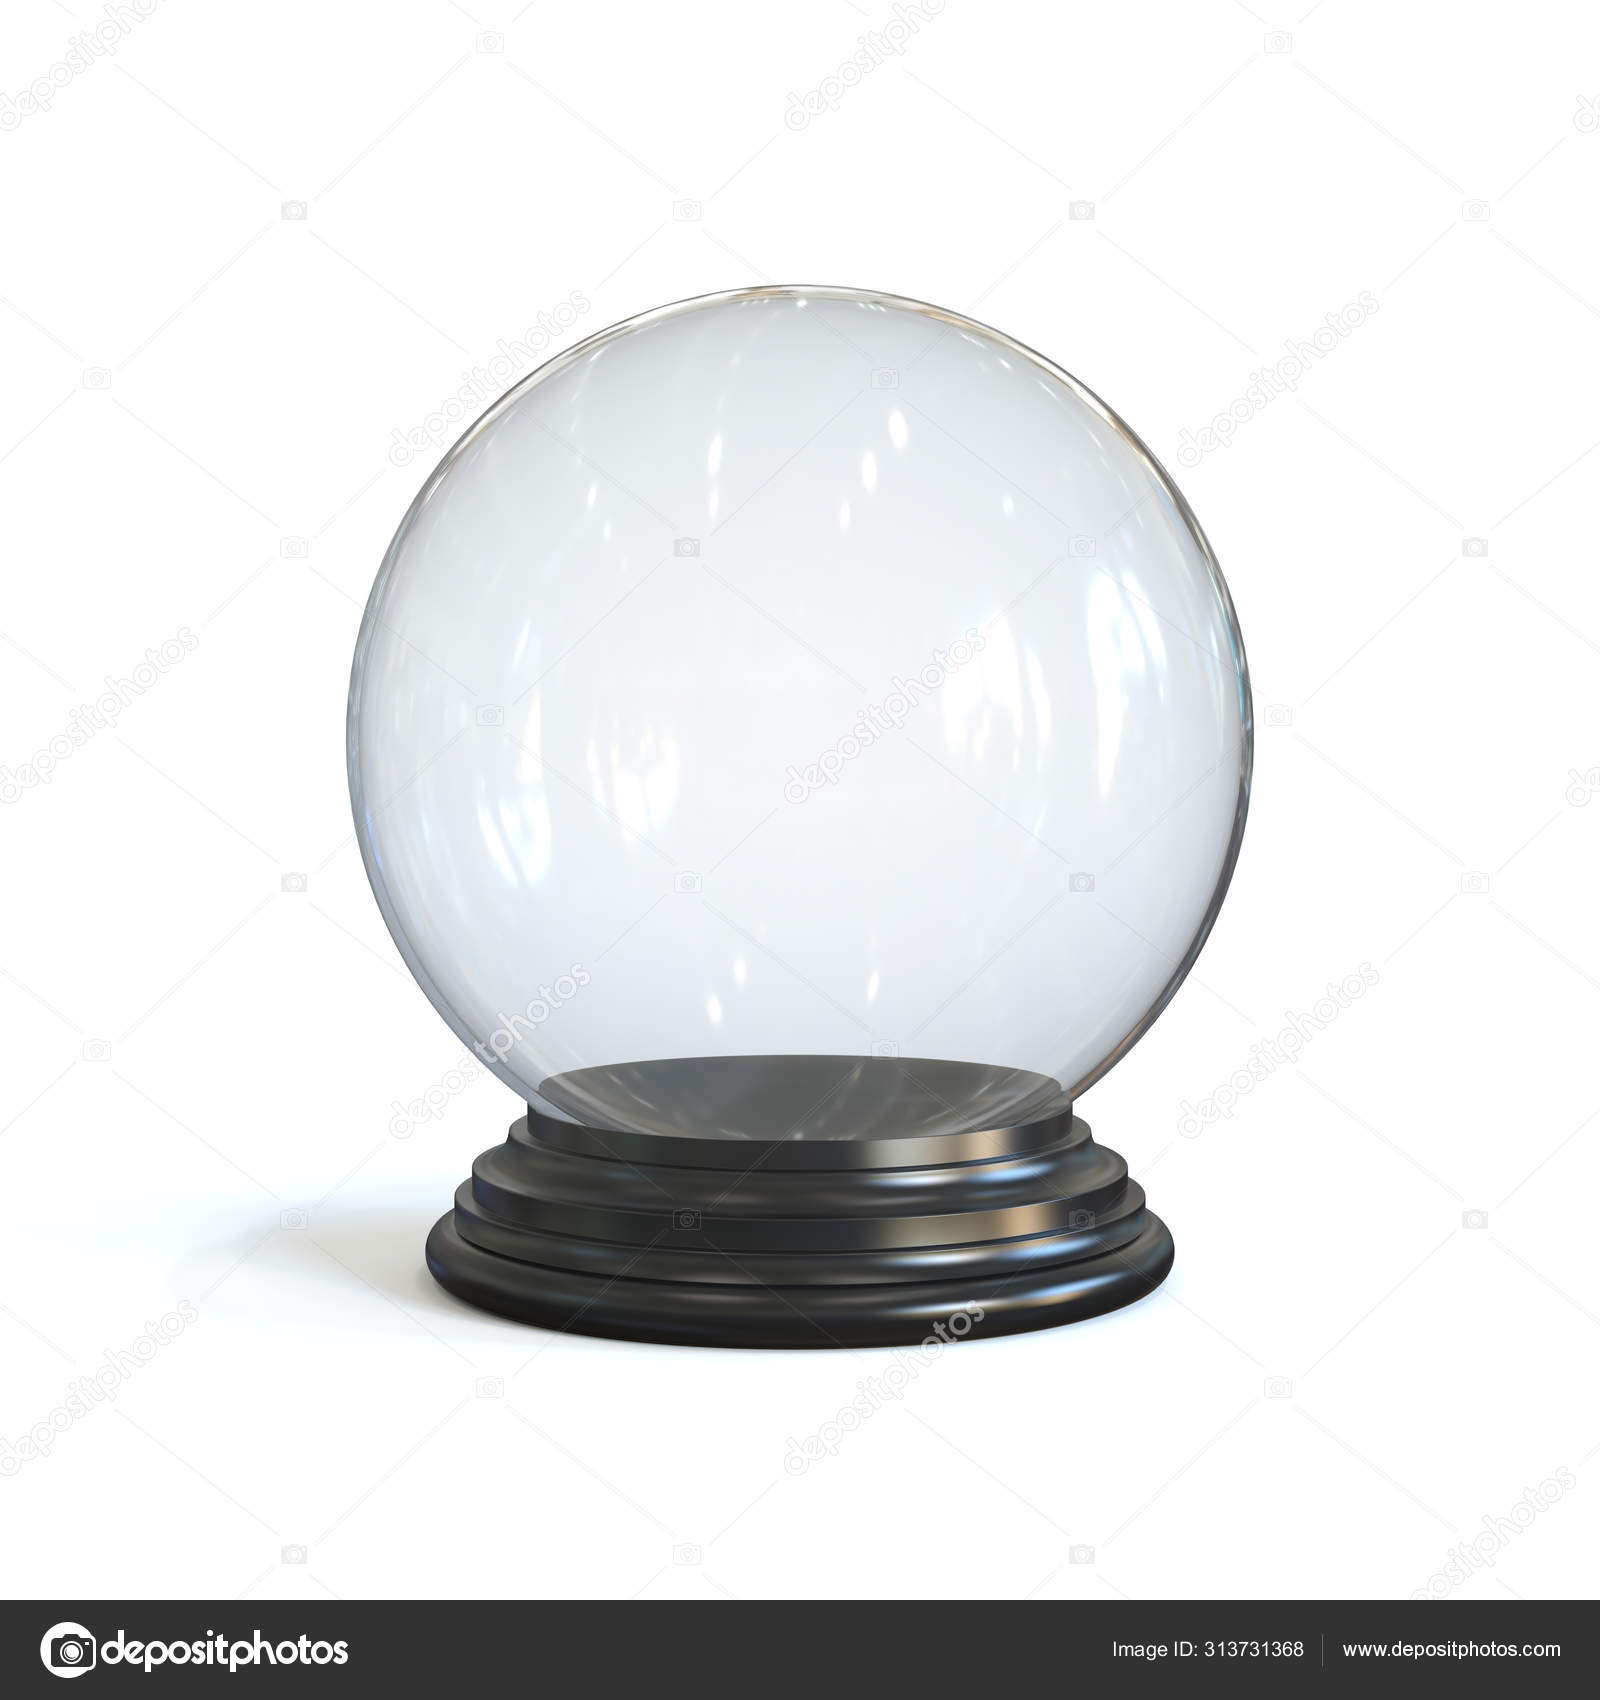 White　Photo　Background　313731368　by　Rendering　Stock　©koya979　Empty　Sphere　Glass　Snow　Globe　Isolated